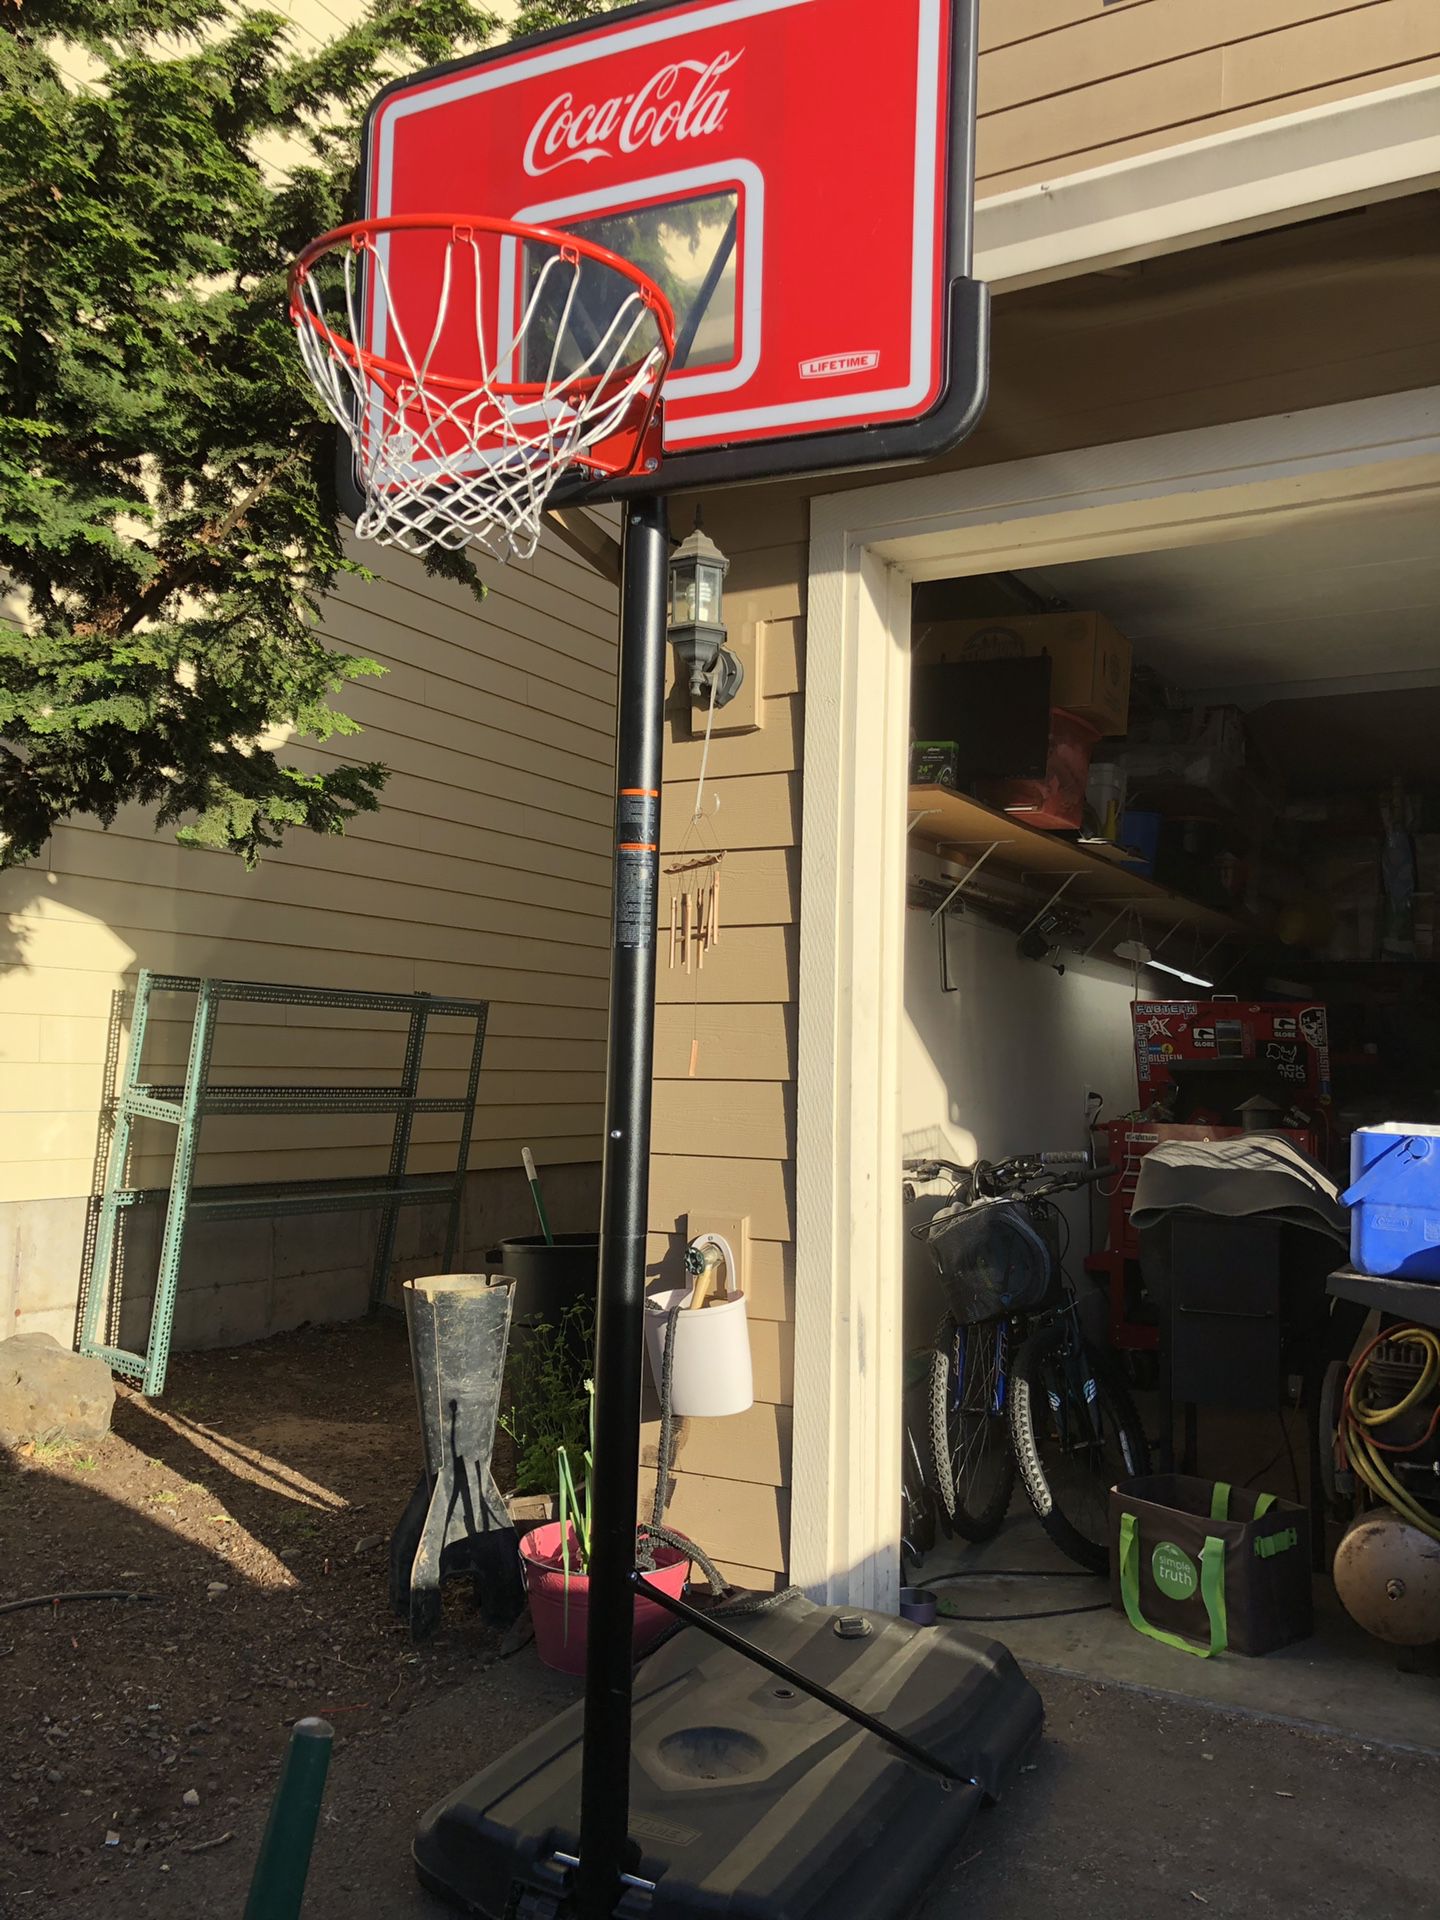 Coca Cola basketball hoop